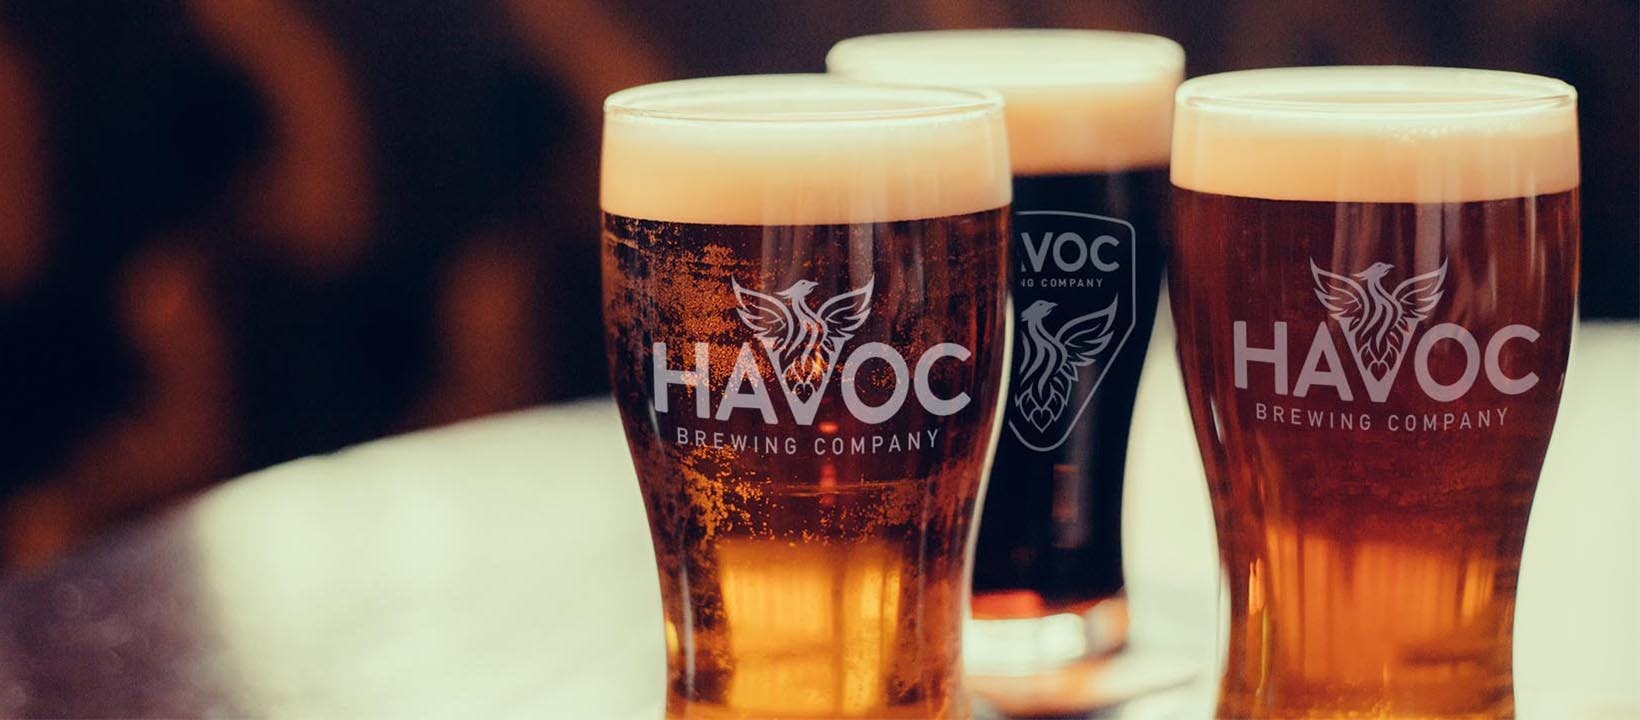 Havoc logo on beer pint glasses